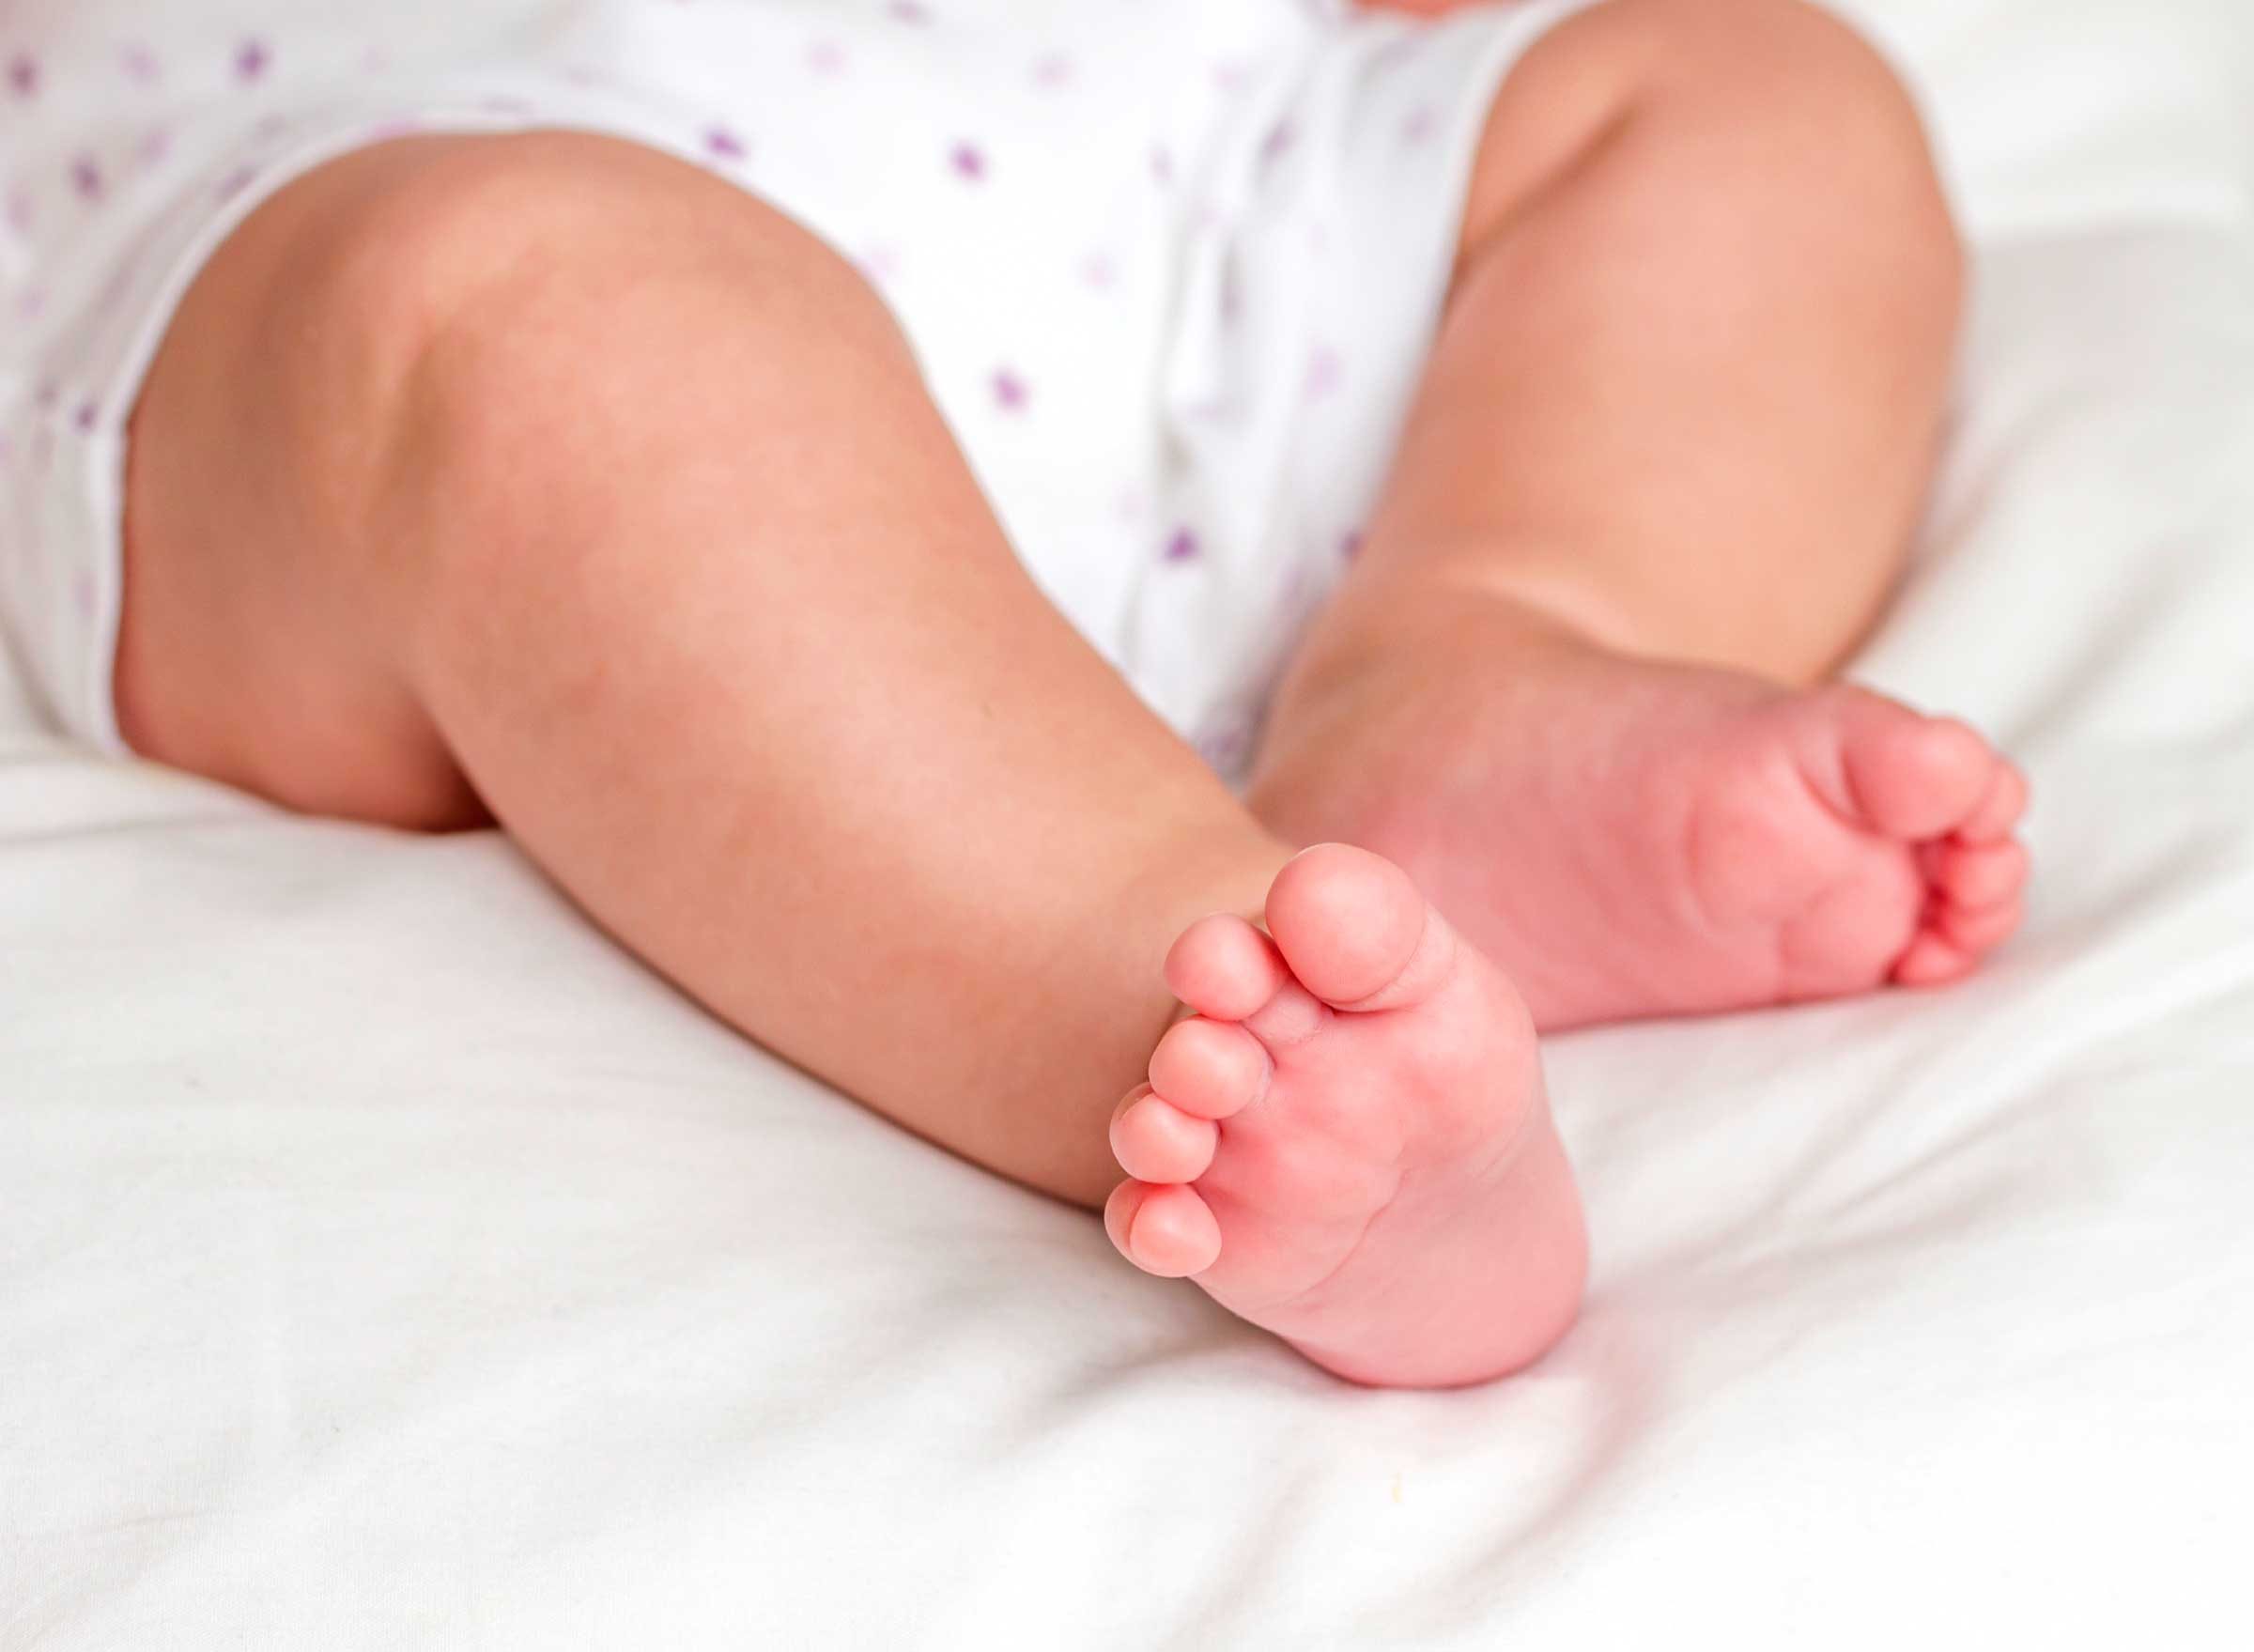 When Do Babies Knees Develop?